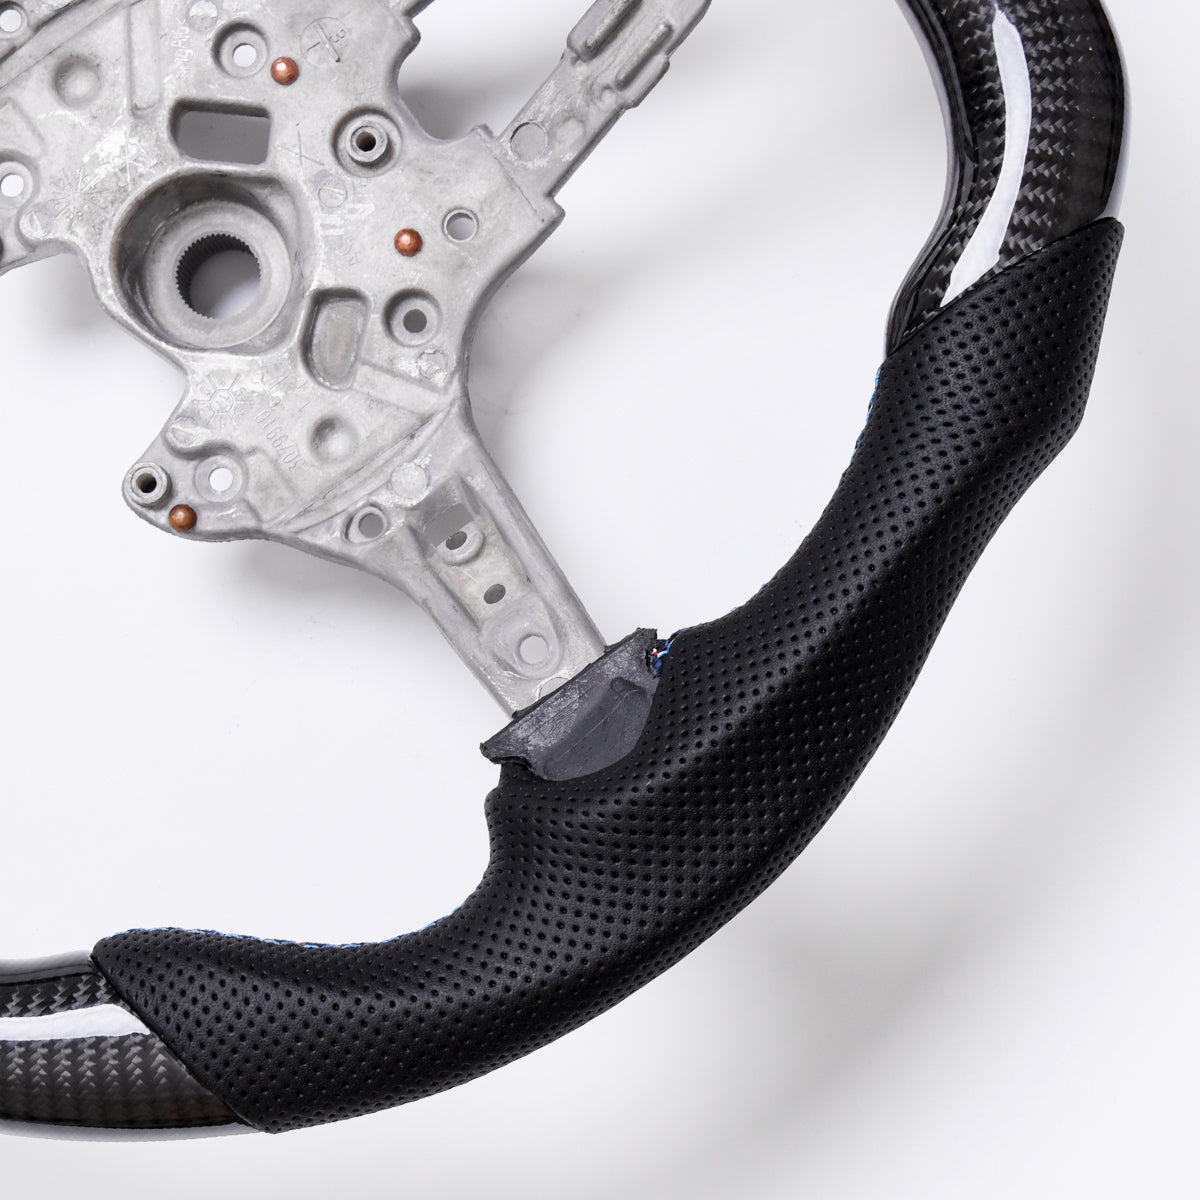 Revolve Carbon Fiber M Performance Steering Wheel | BMW M2 F87 M3 F80 M4 F82 F83 / 1 2 3 4 Series/X1 X2 X3 X4 X5 X6 - revolvesteering